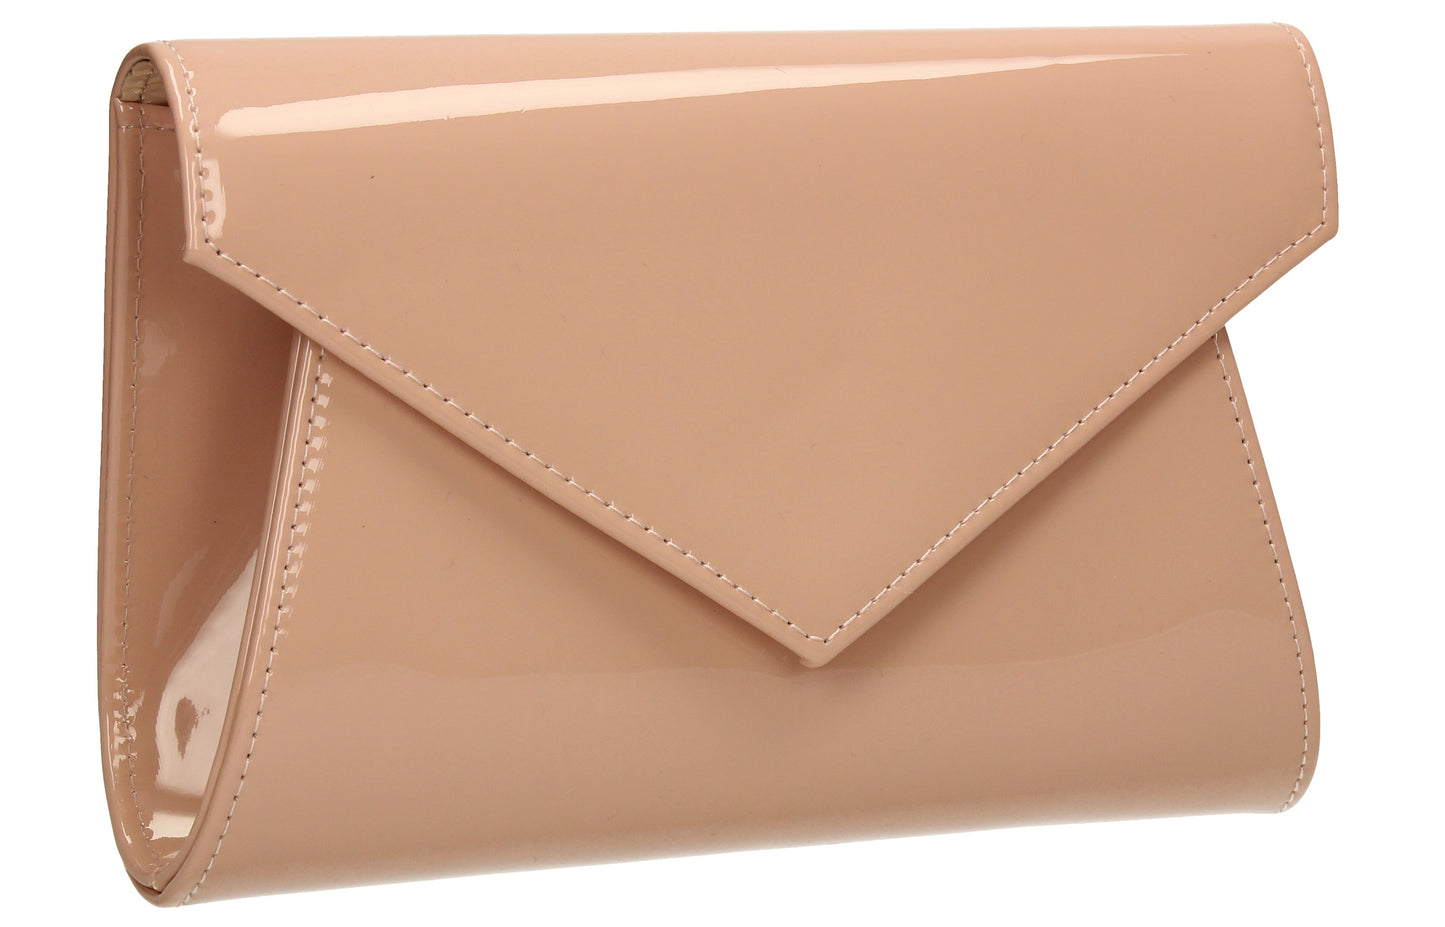 SWANKYSWANS Chrissy Envelope Clutch Bag Pink Beige Cute Cheap Clutch Bag For Weddings School and Work